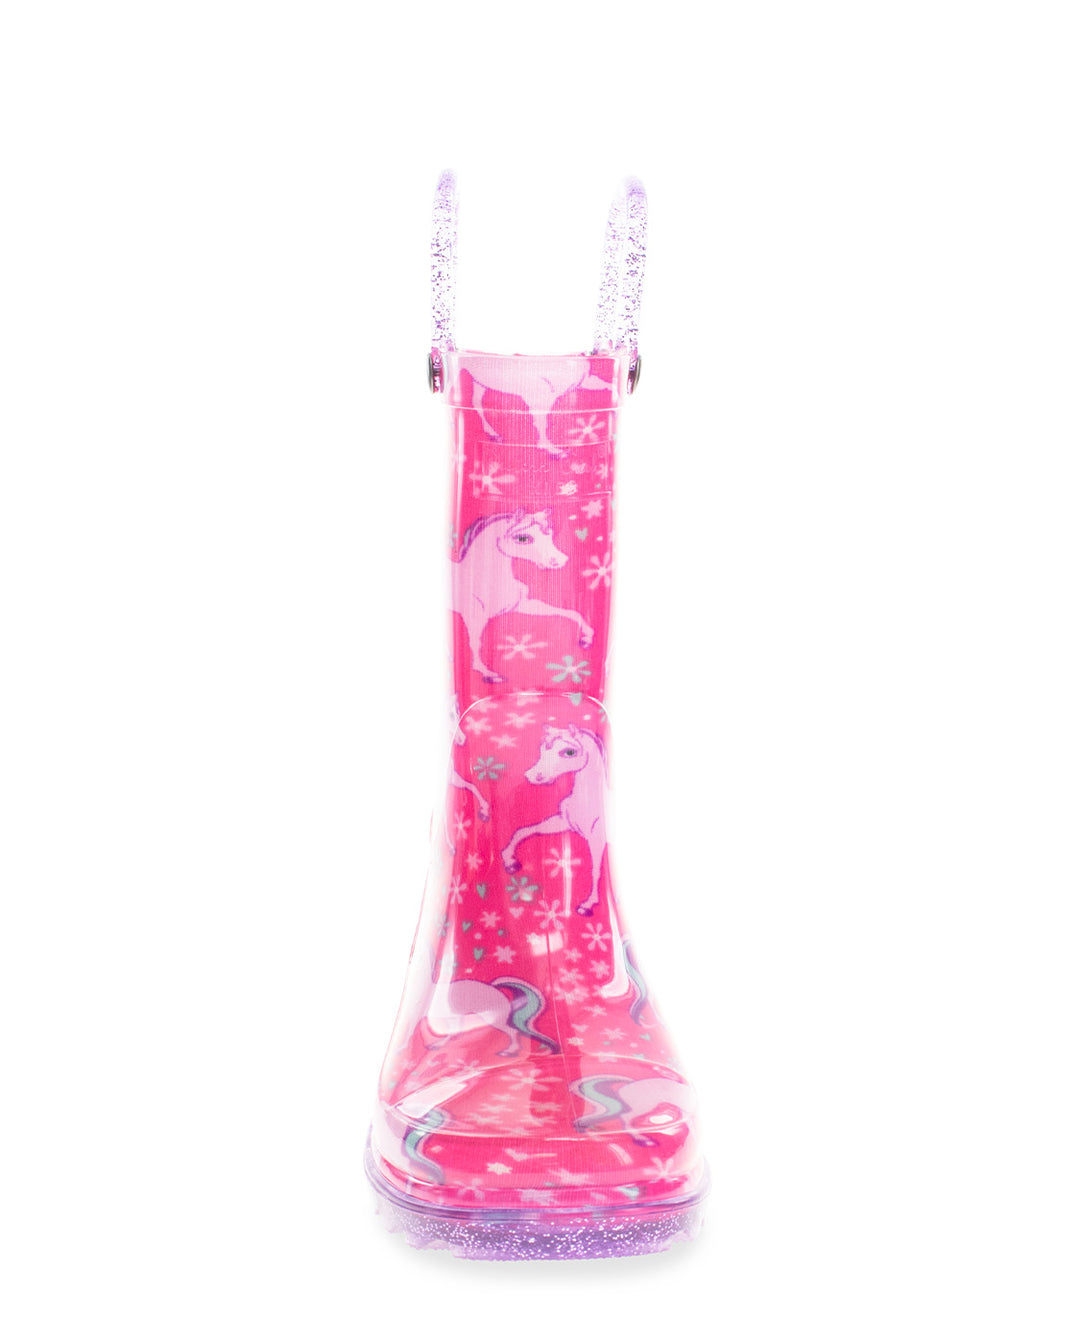 Kids Gallop Girl Lighted Rain Boot - Pink